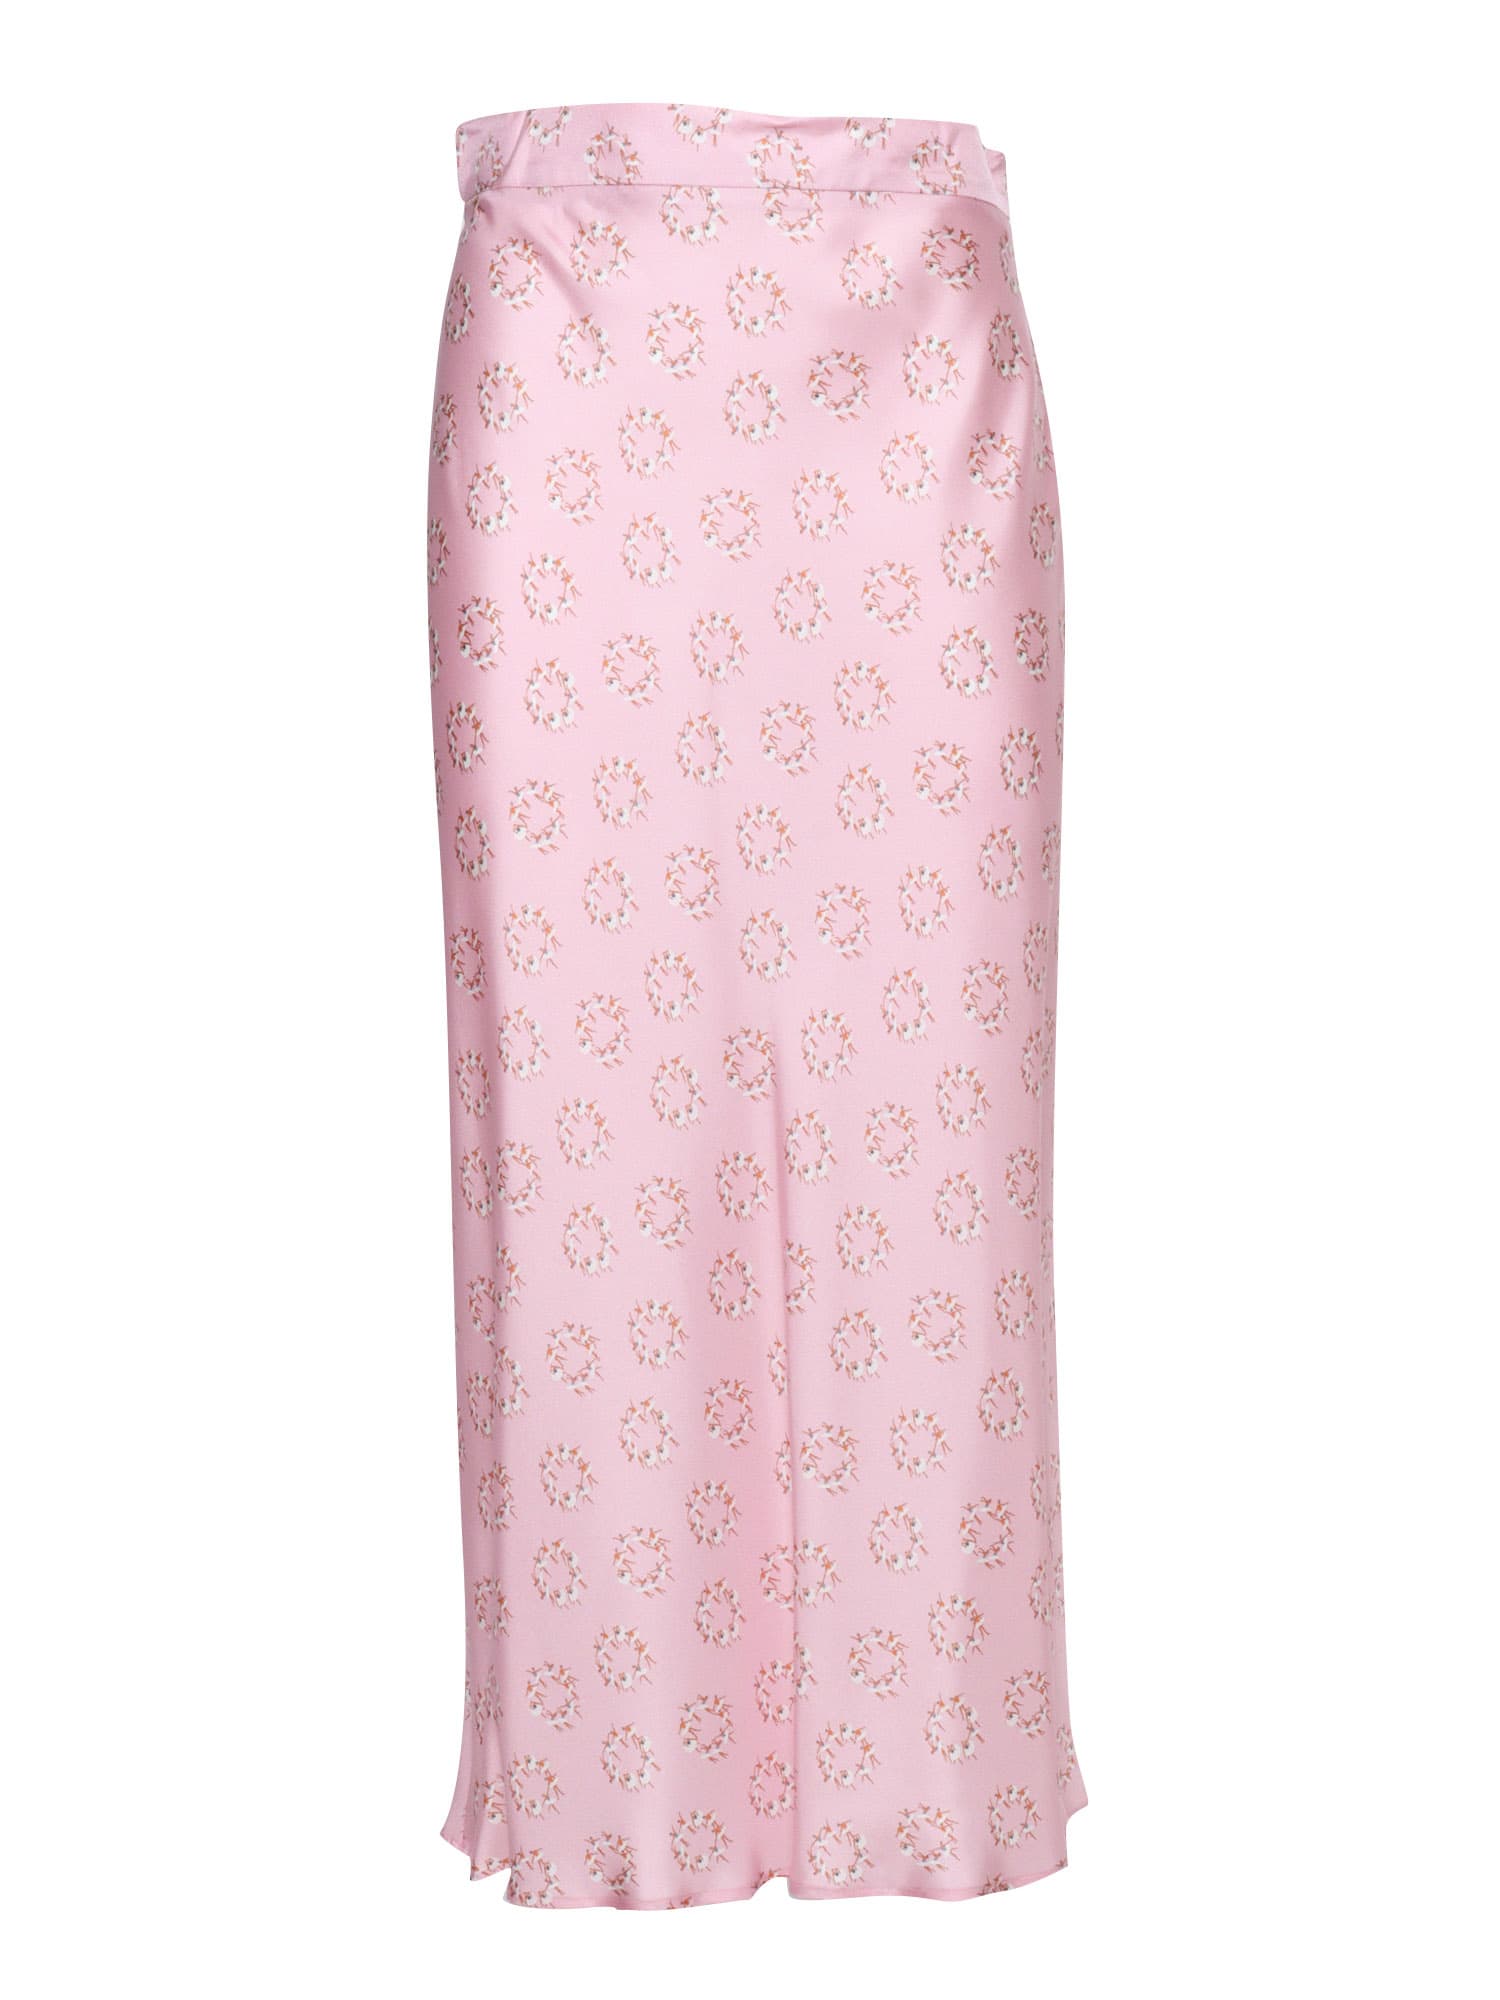 Max Mara Pink Cavallo Skirt